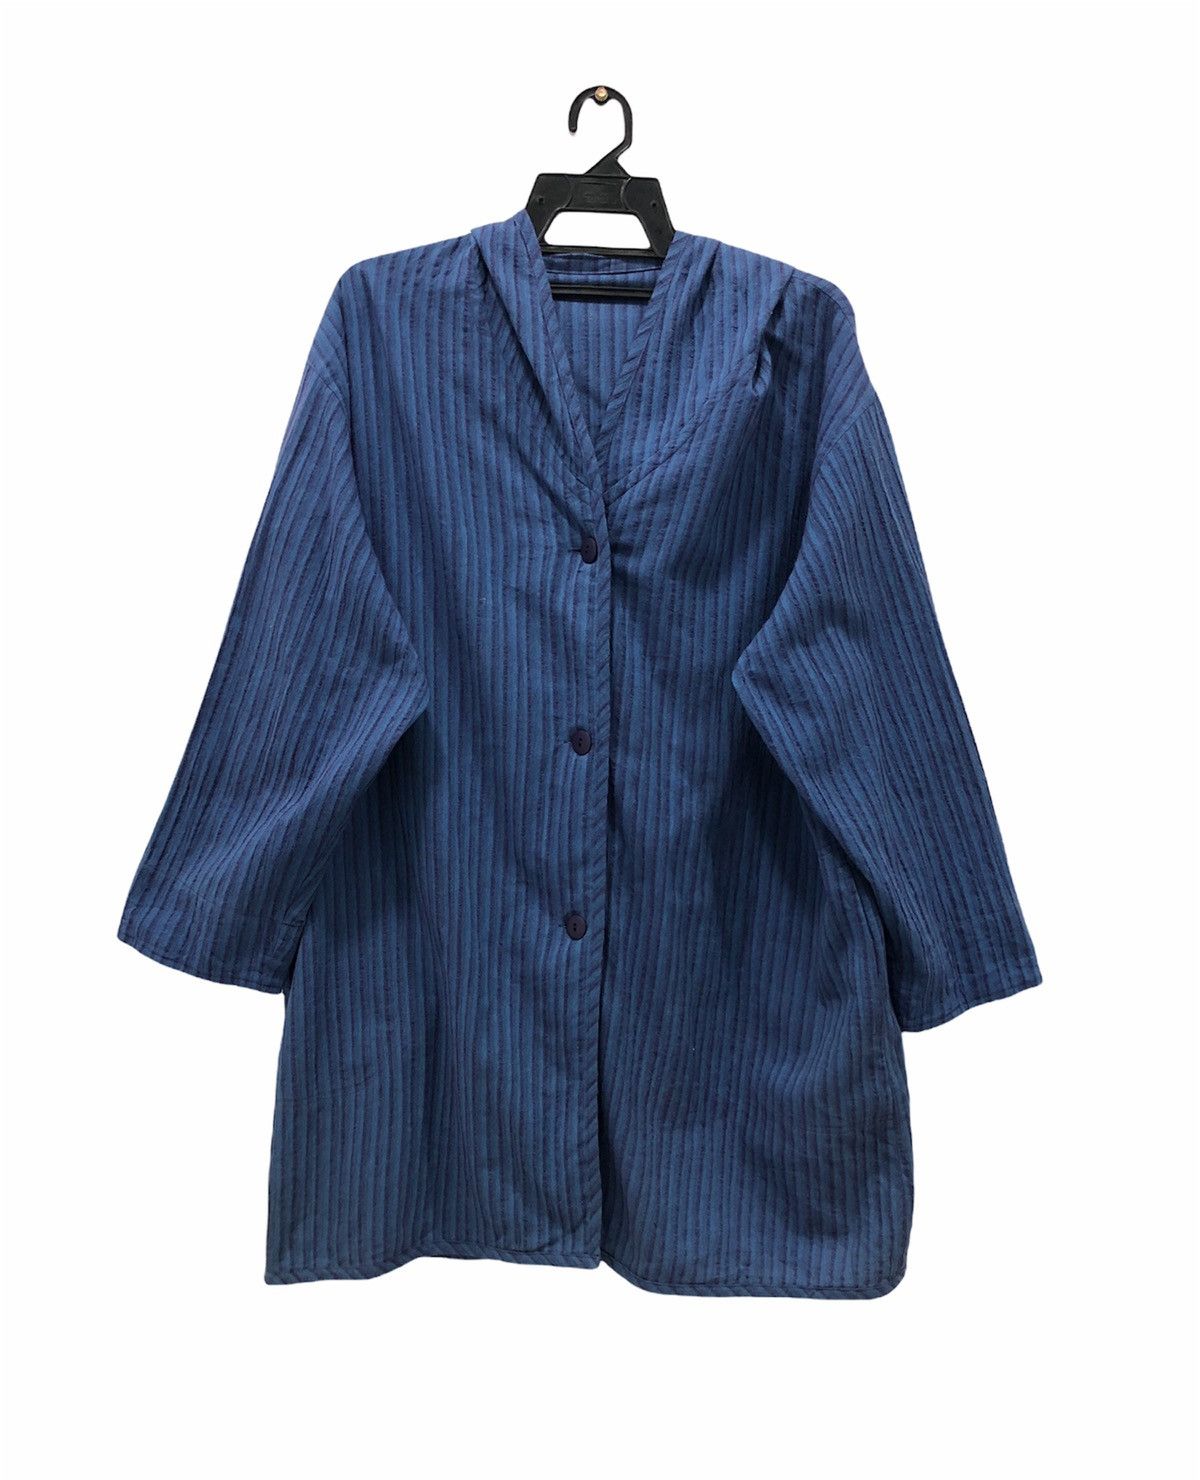 Japanese Brand japanese brand stripe jacket | Grailed